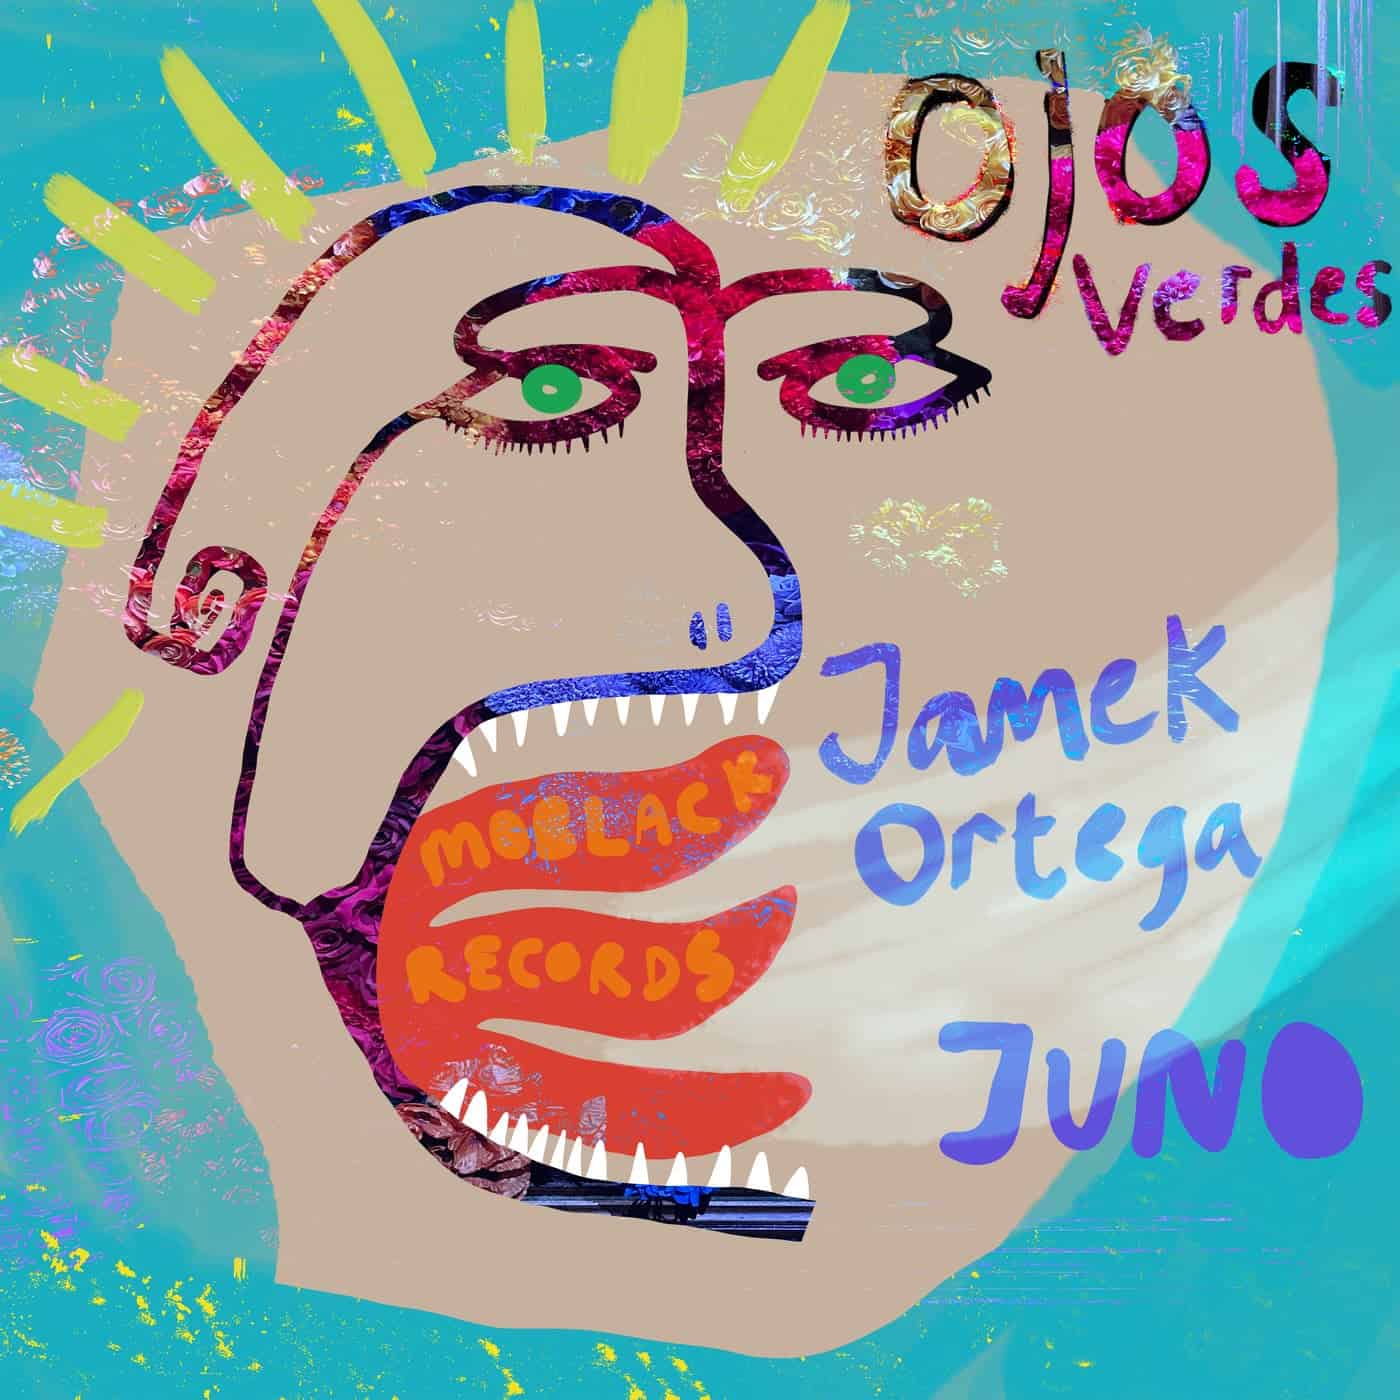 Download Jamek Ortega, JUNO (DE) - Ojos Verdes on Electrobuzz